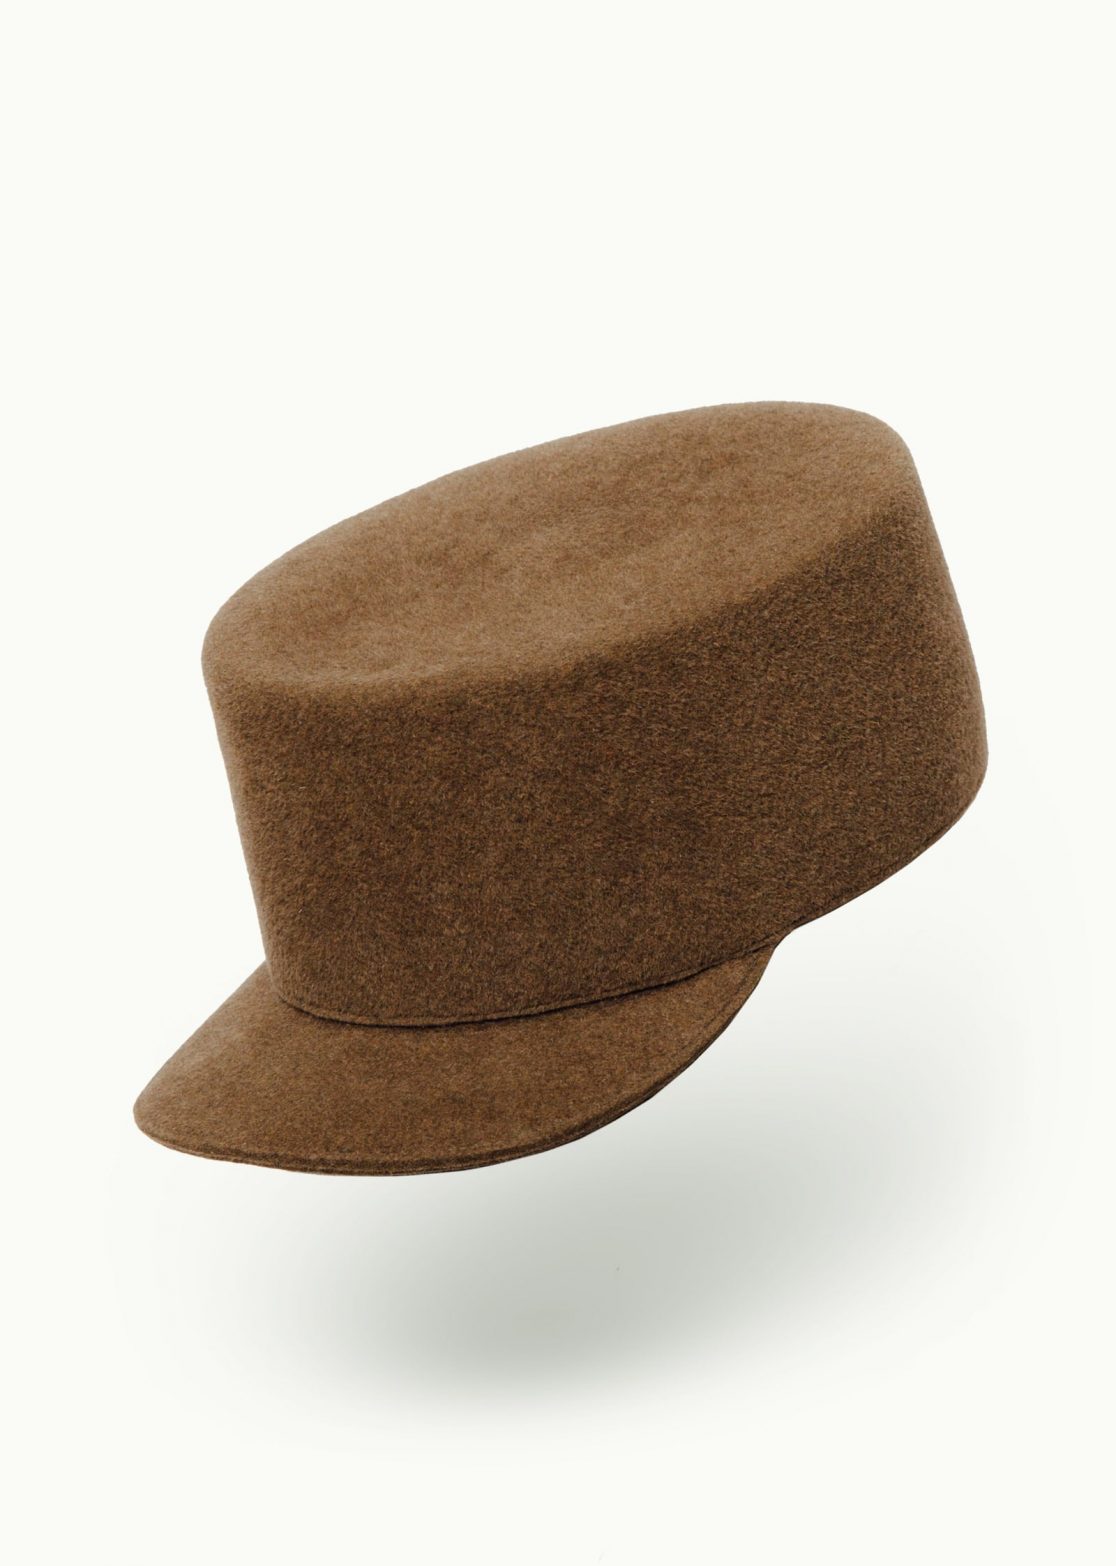 Hats - Women - Unisex - Men - Sandarm Rust Image Primary